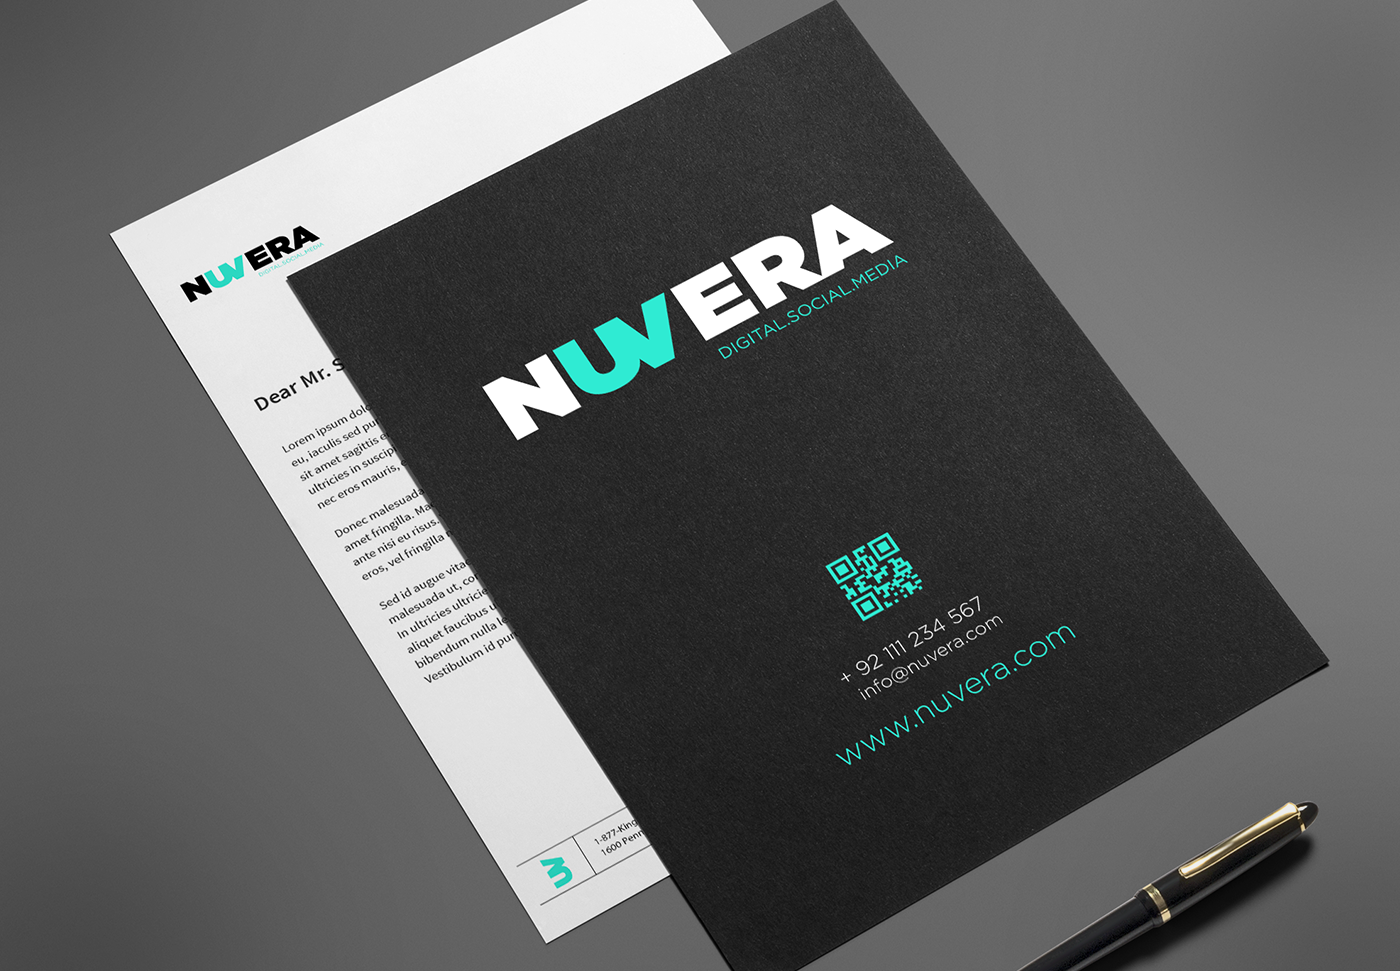 Nuvera noor Noor Ala Noor digital agency branding  Social media agency